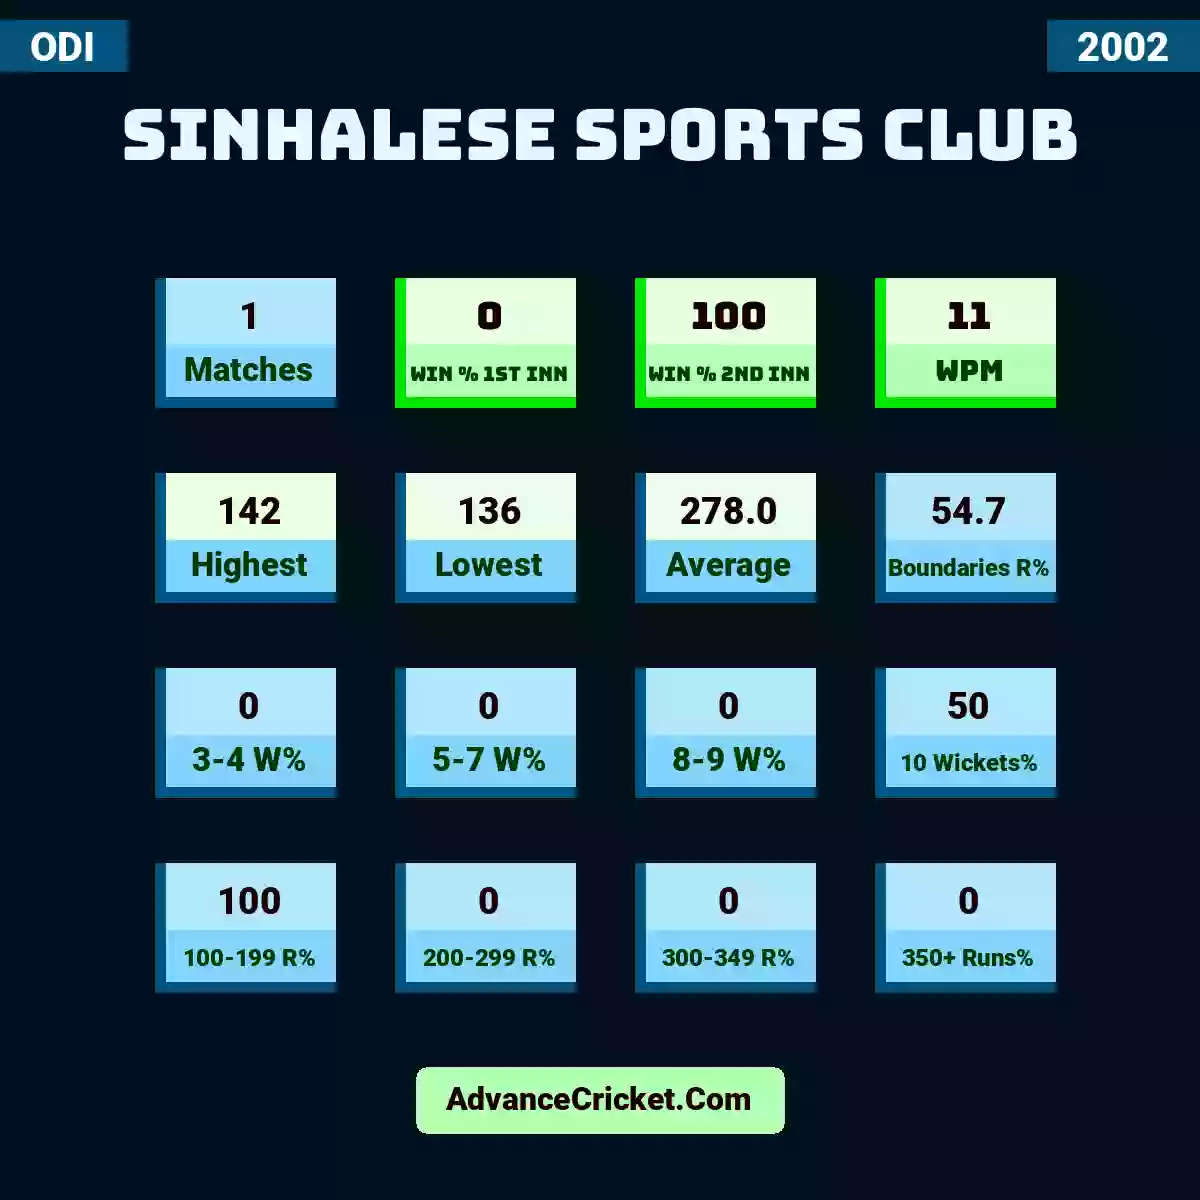 Image showing Sinhalese Sports Club with Matches: 1, Win % 1st Inn: 0, Win % 2nd Inn: 100, WPM: 11, Highest: 142, Lowest: 136, Average: 278.0, Boundaries R%: 54.7, 3-4 W%: 0, 5-7 W%: 0, 8-9 W%: 0, 10 Wickets%: 50, 100-199 R%: 100, 200-299 R%: 0, 300-349 R%: 0, 350+ Runs%: 0.